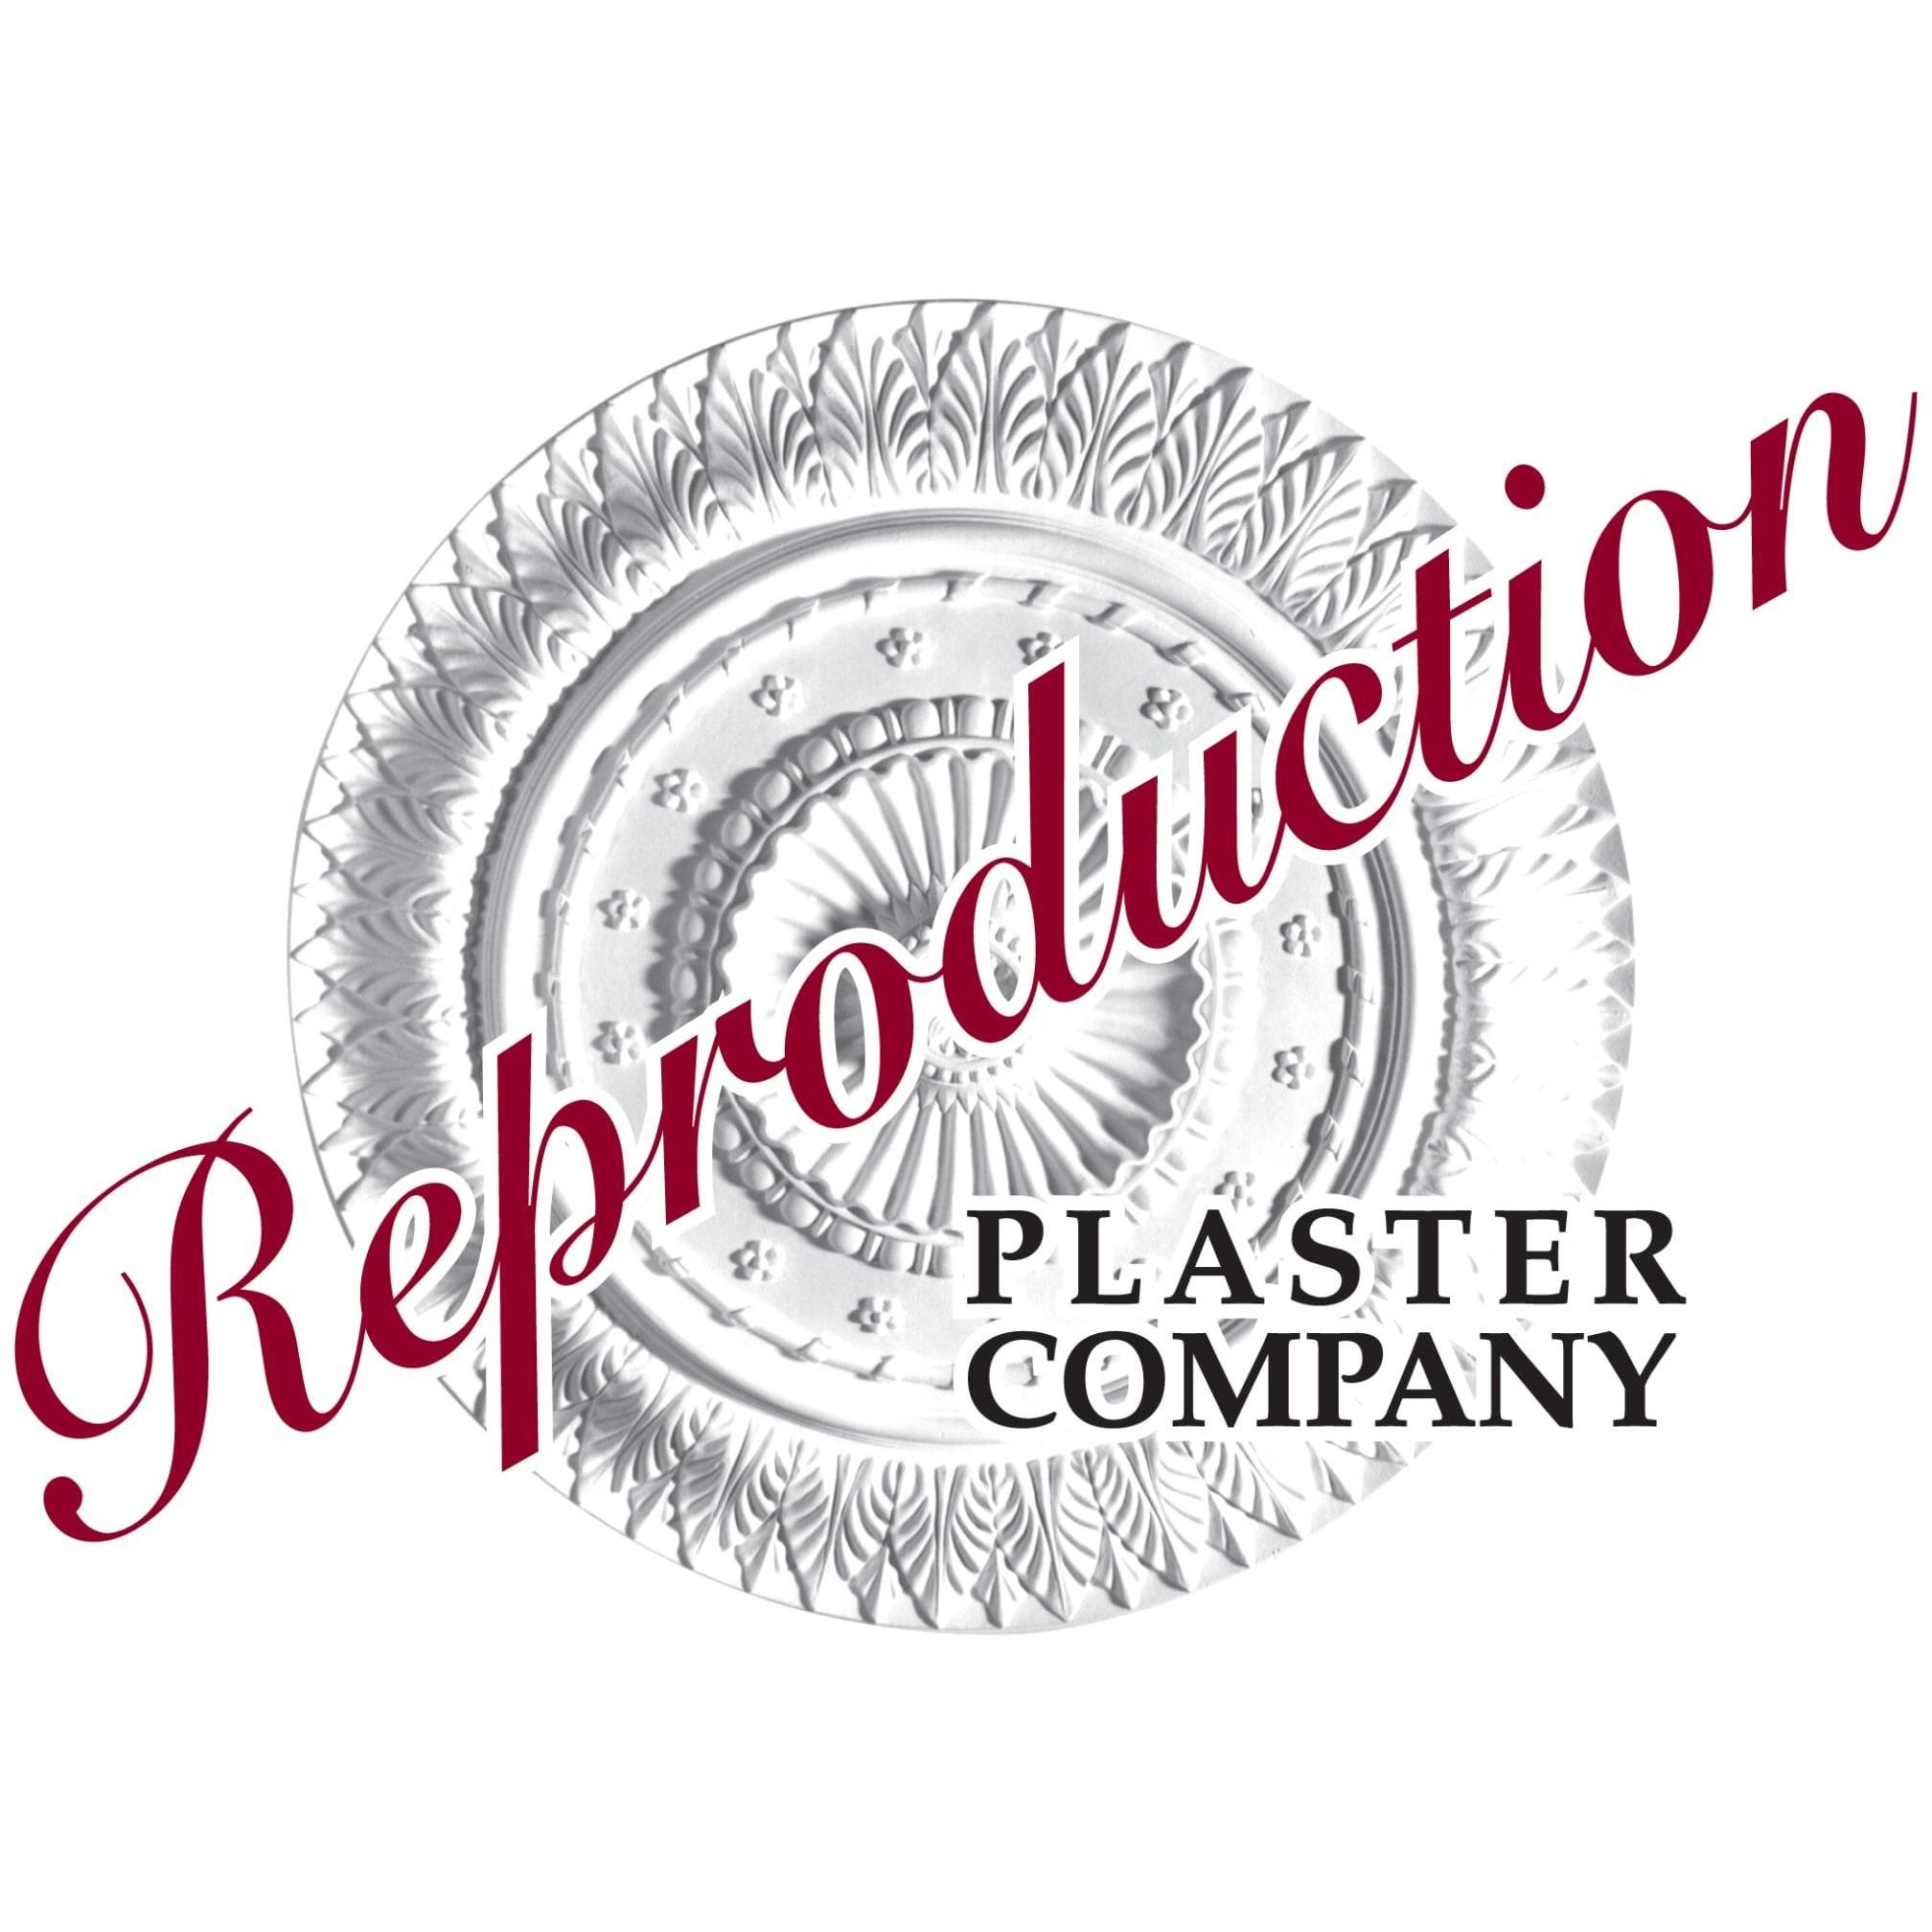 Reproduction Plaster Co.Ltd Logo